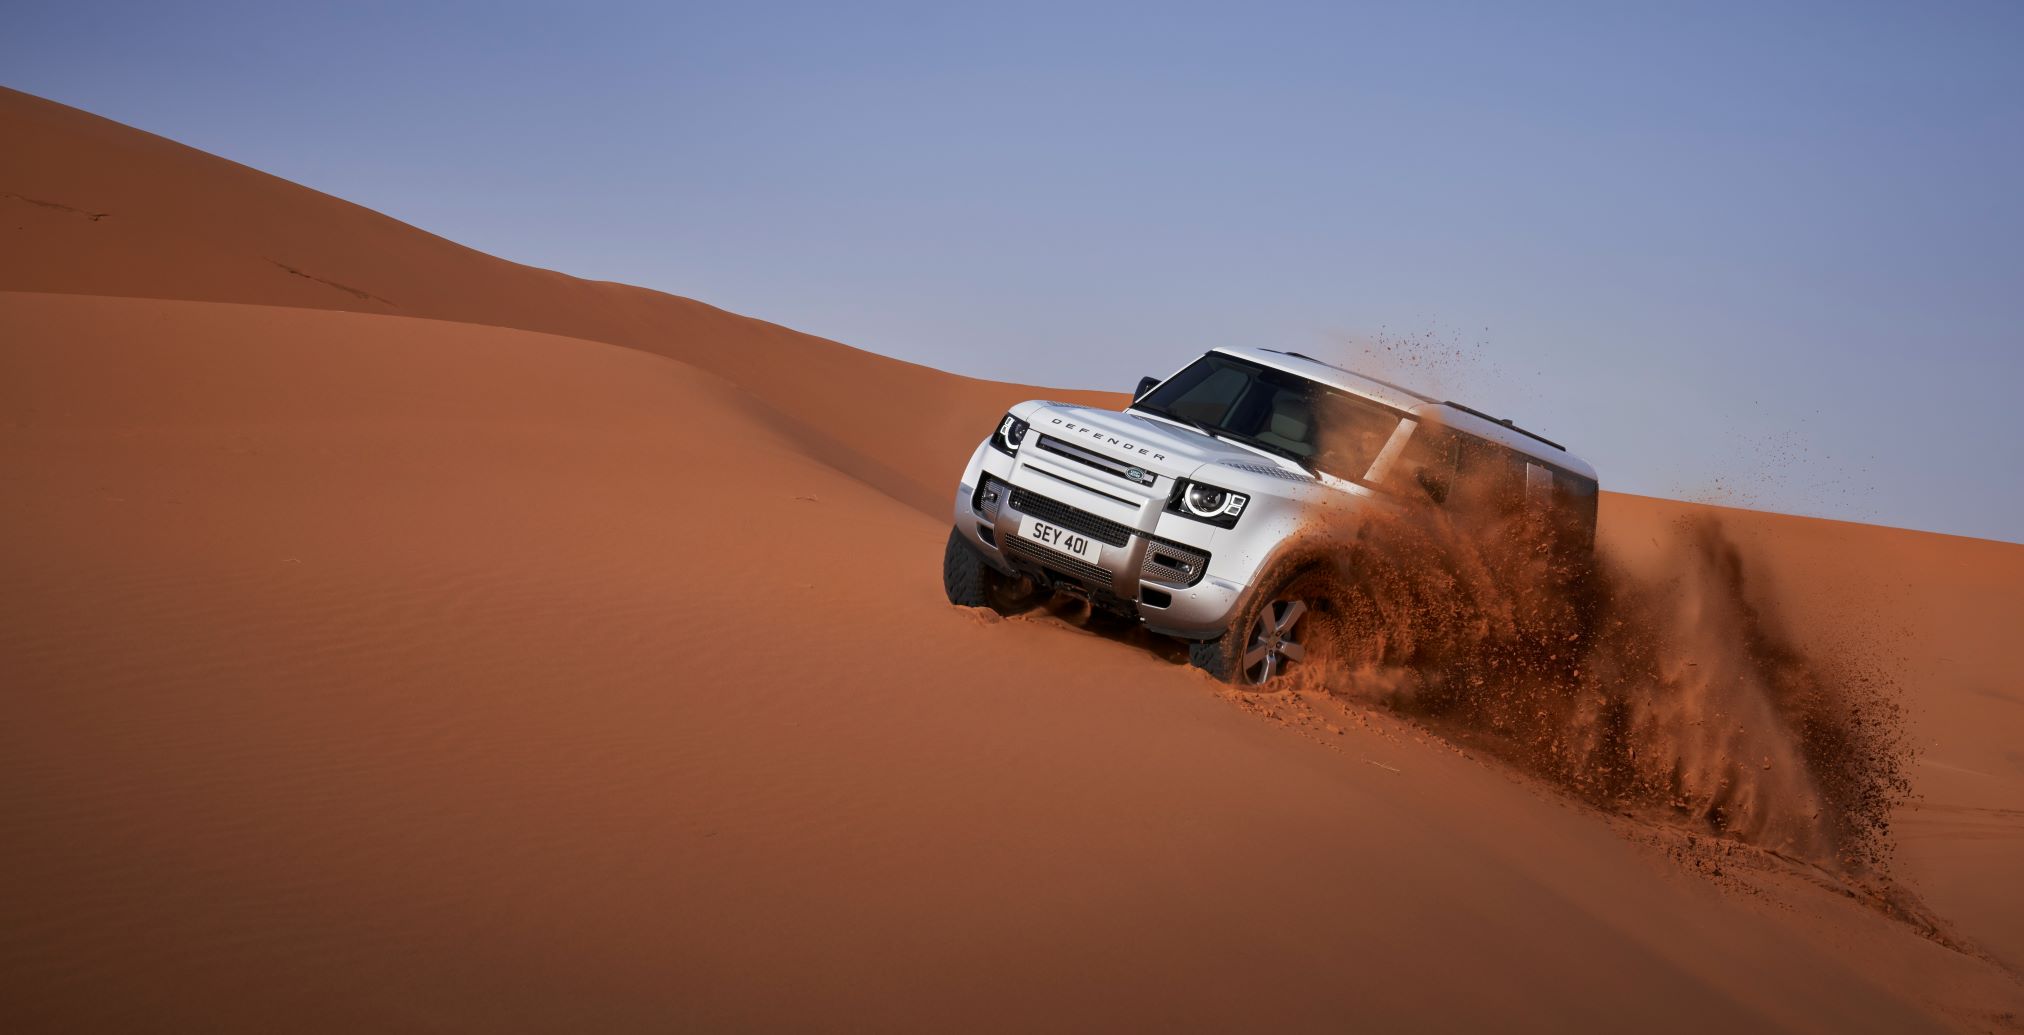 New Land Rover Defender 130 off-roading in a desert